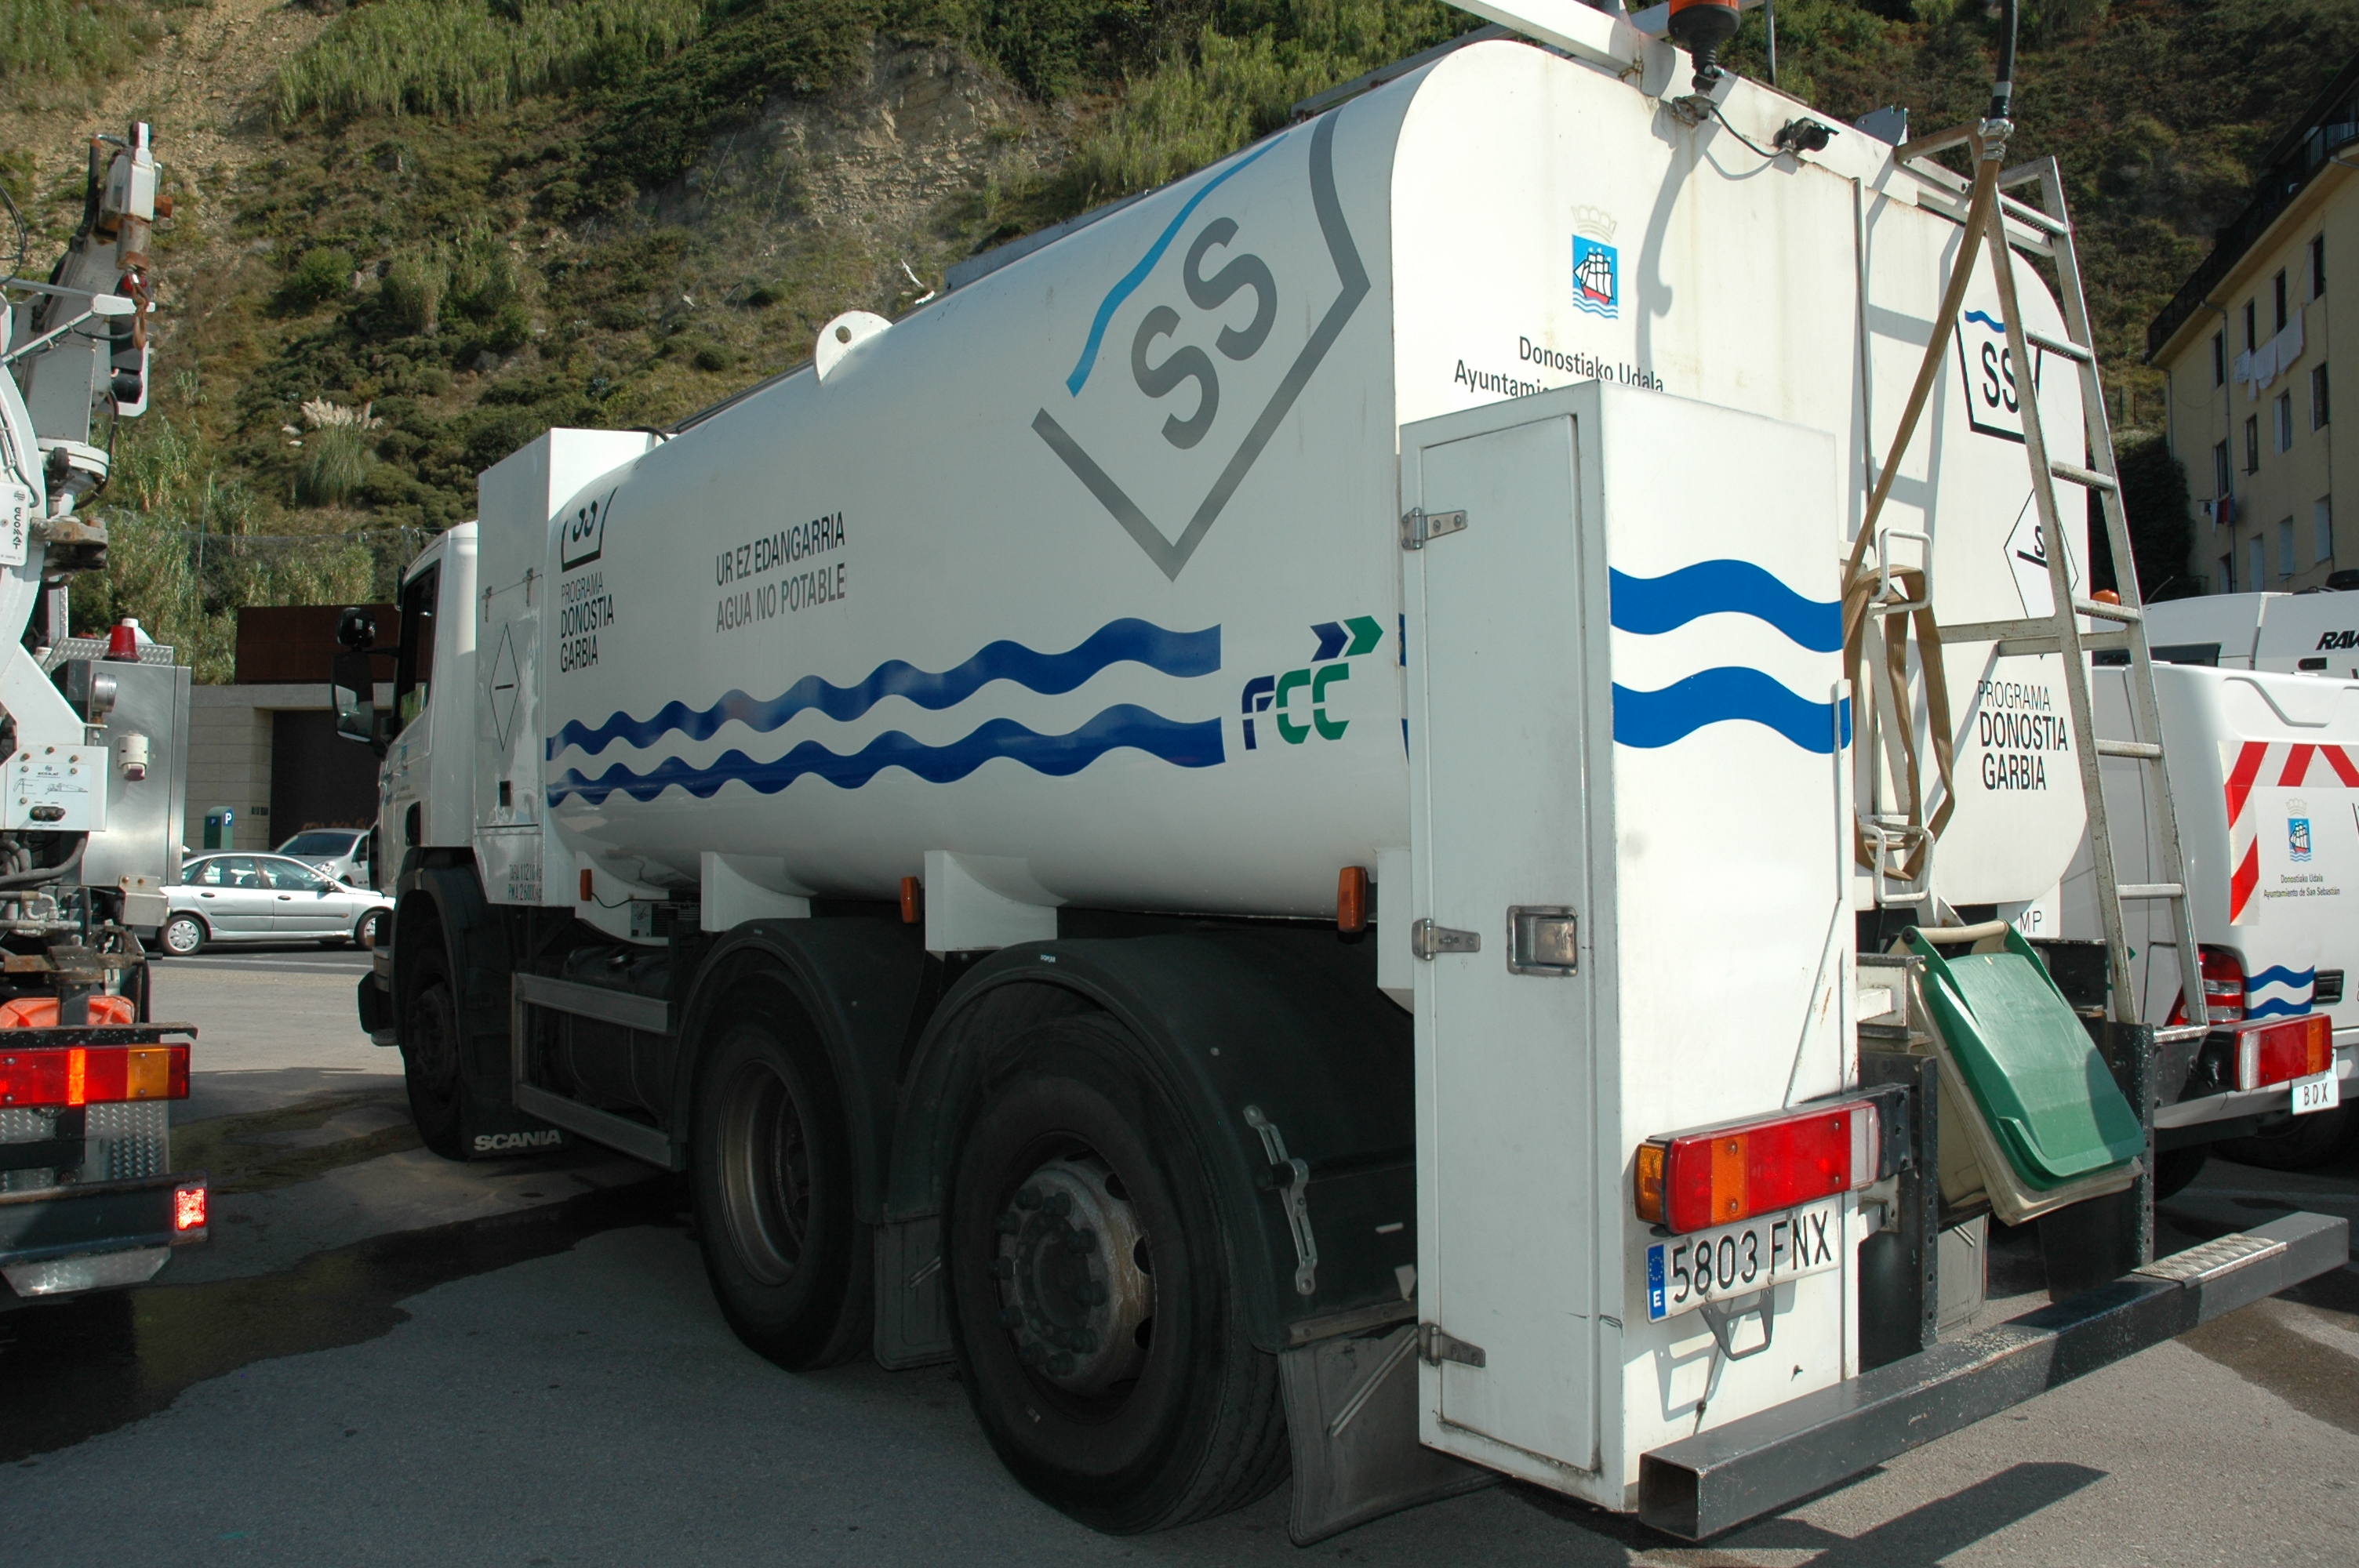 FCC awarded waste collection contract in San Sebastián